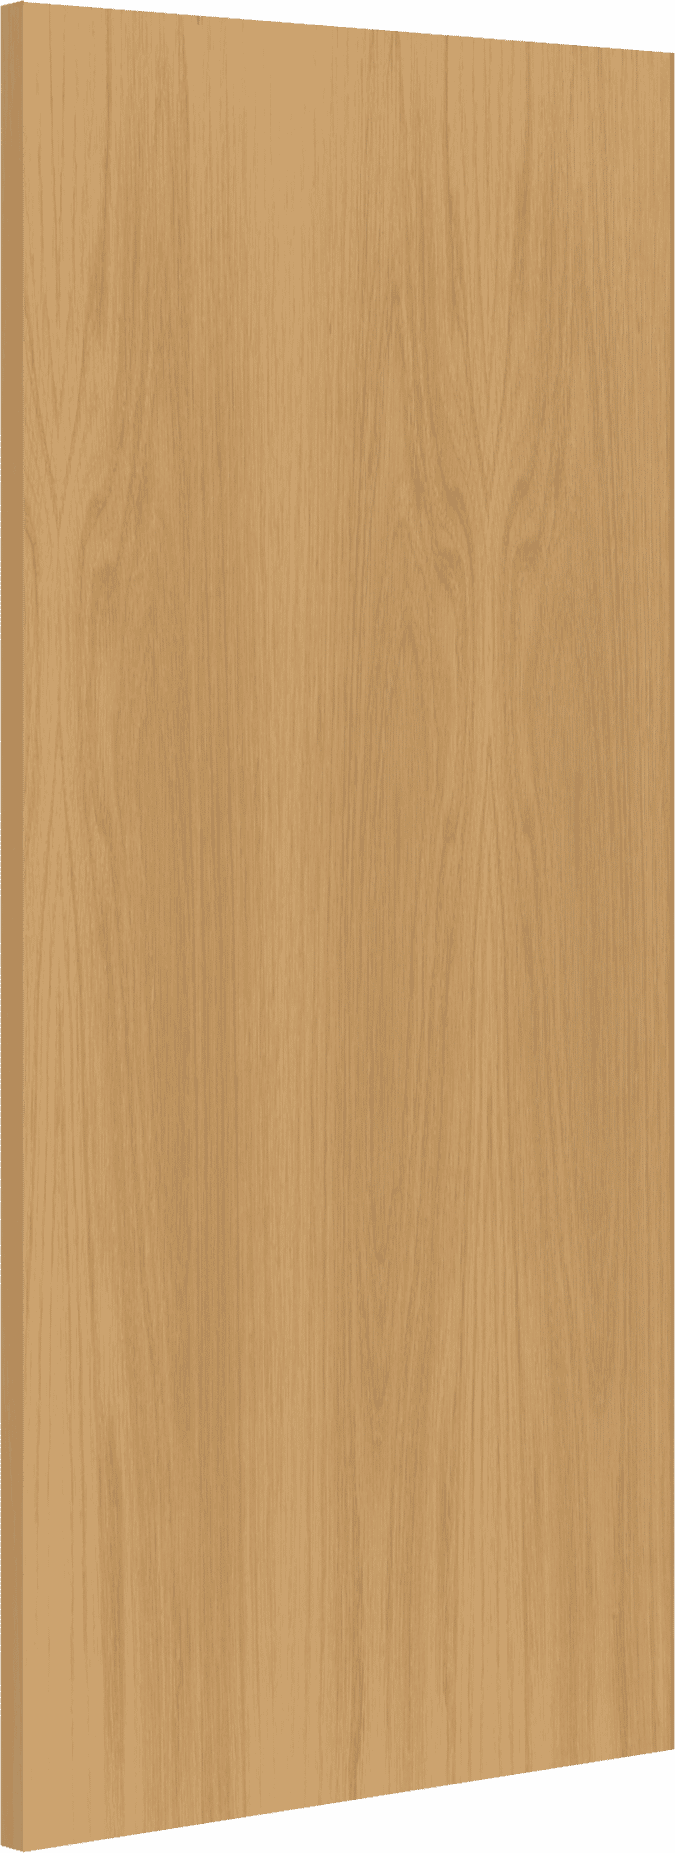 1981 x 864 x 54mm (34") Deanta Architectural Flush Oak - Prefinished   FD60 Fire Door